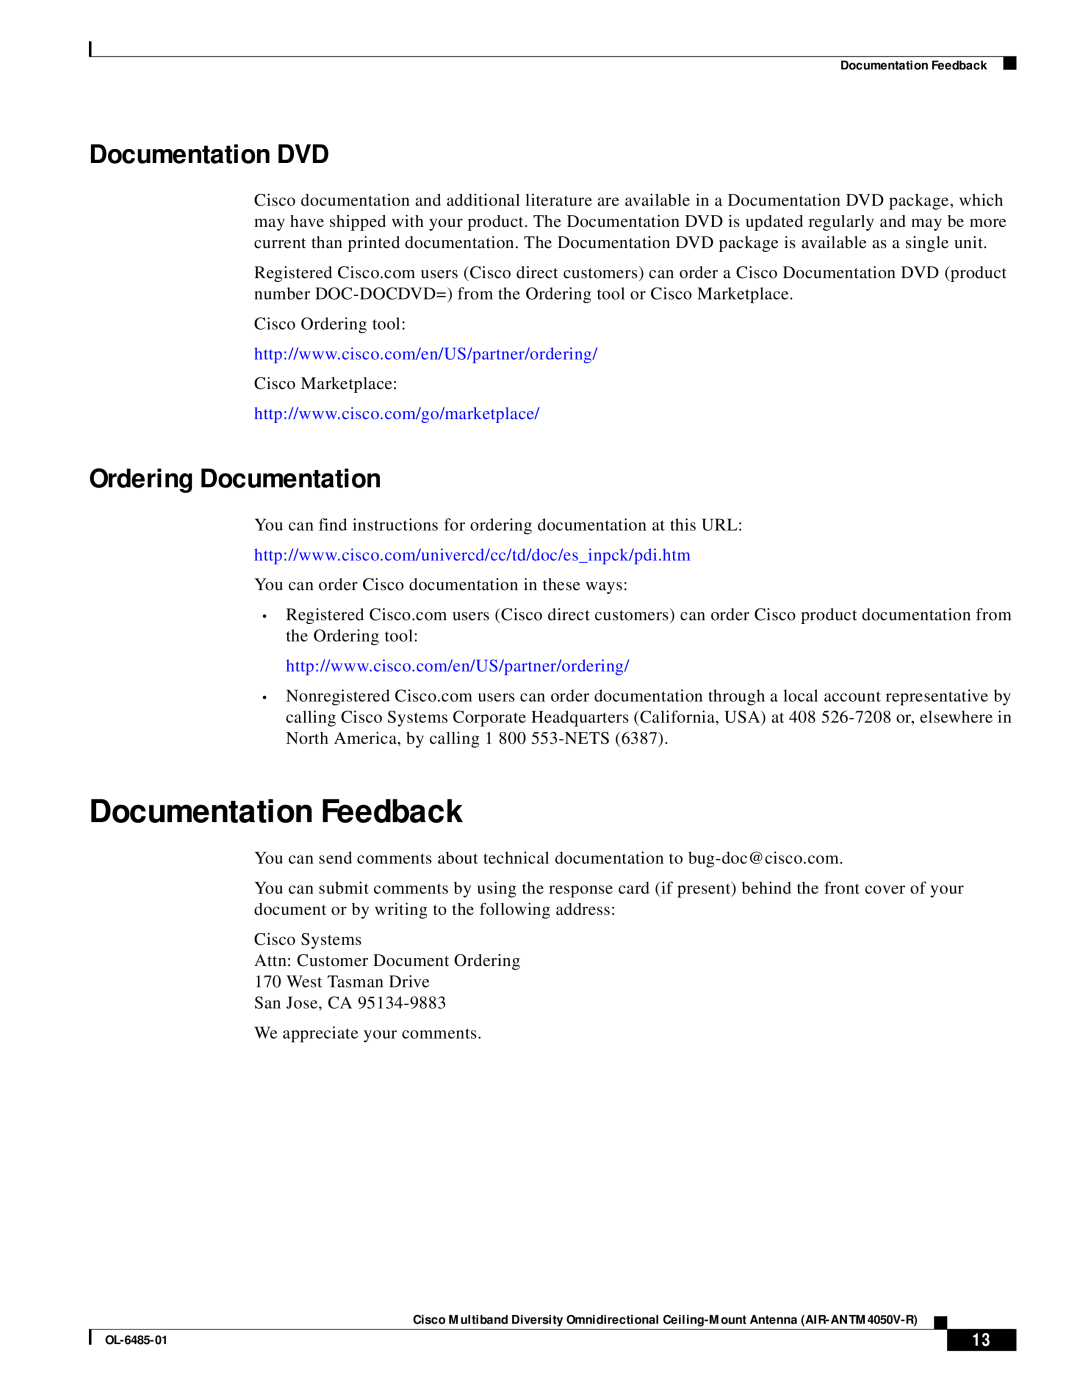 Cisco Systems AIR-ANTM4050V-R warranty Documentation Feedback, Documentation DVD, Ordering Documentation 